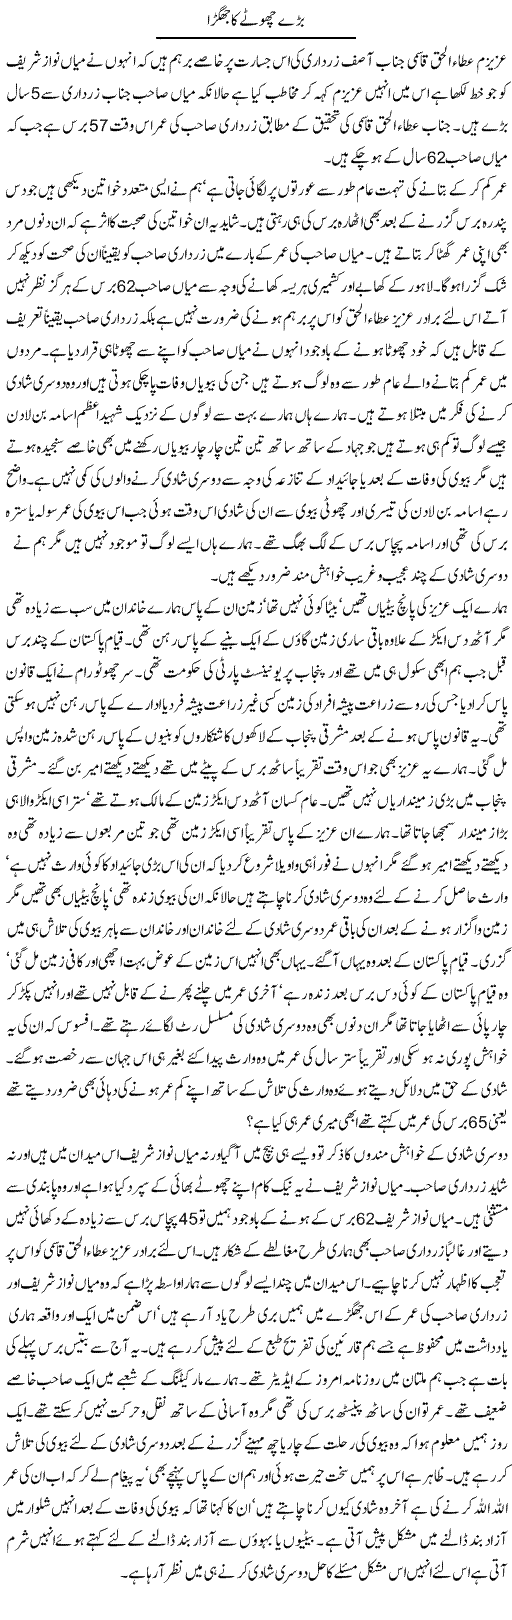 Age of Zardari Express Column Hameed Akhtar 13 June 2011